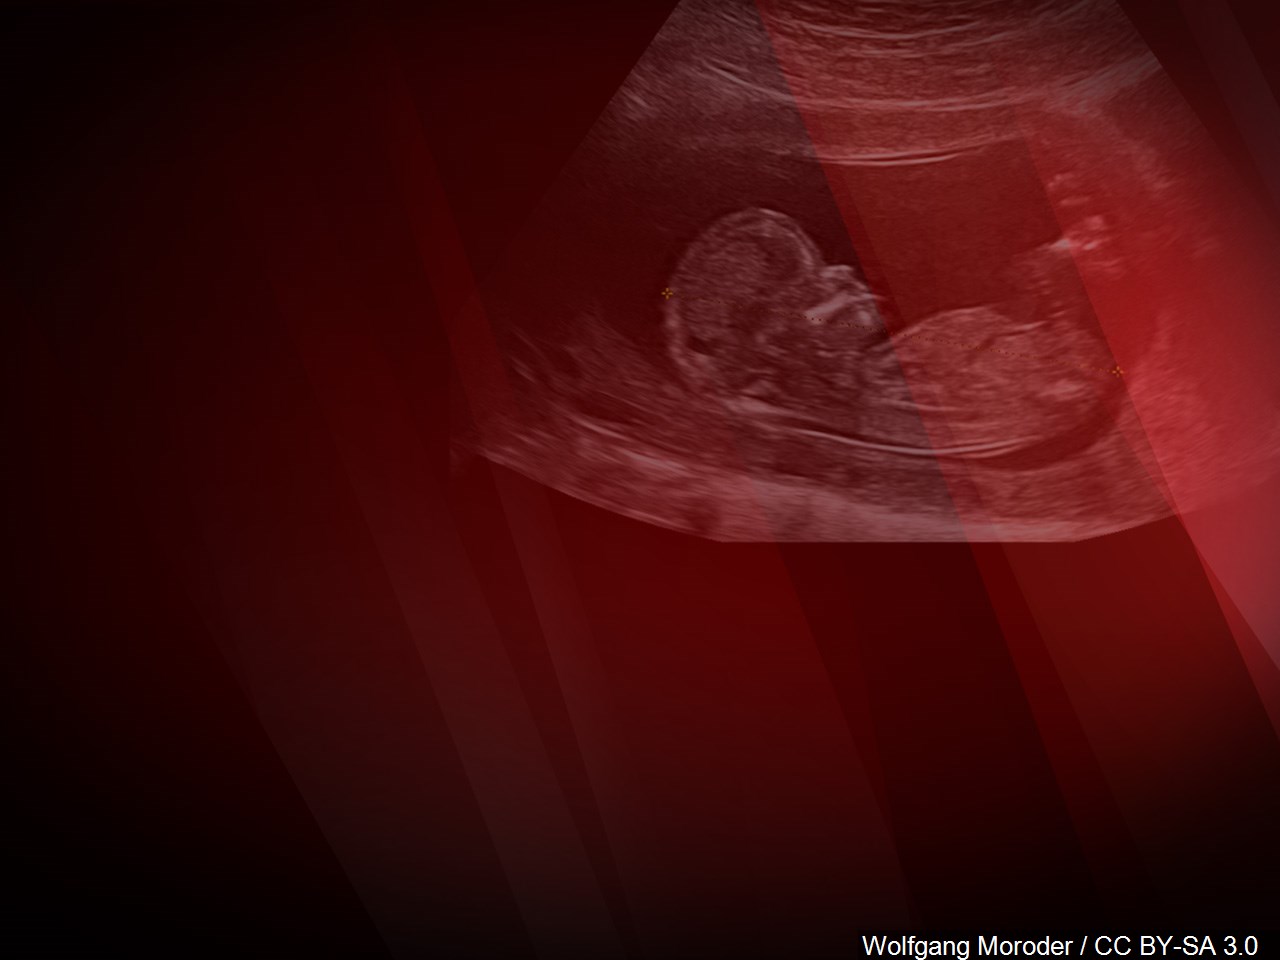 Alabama appeals abortion ruling